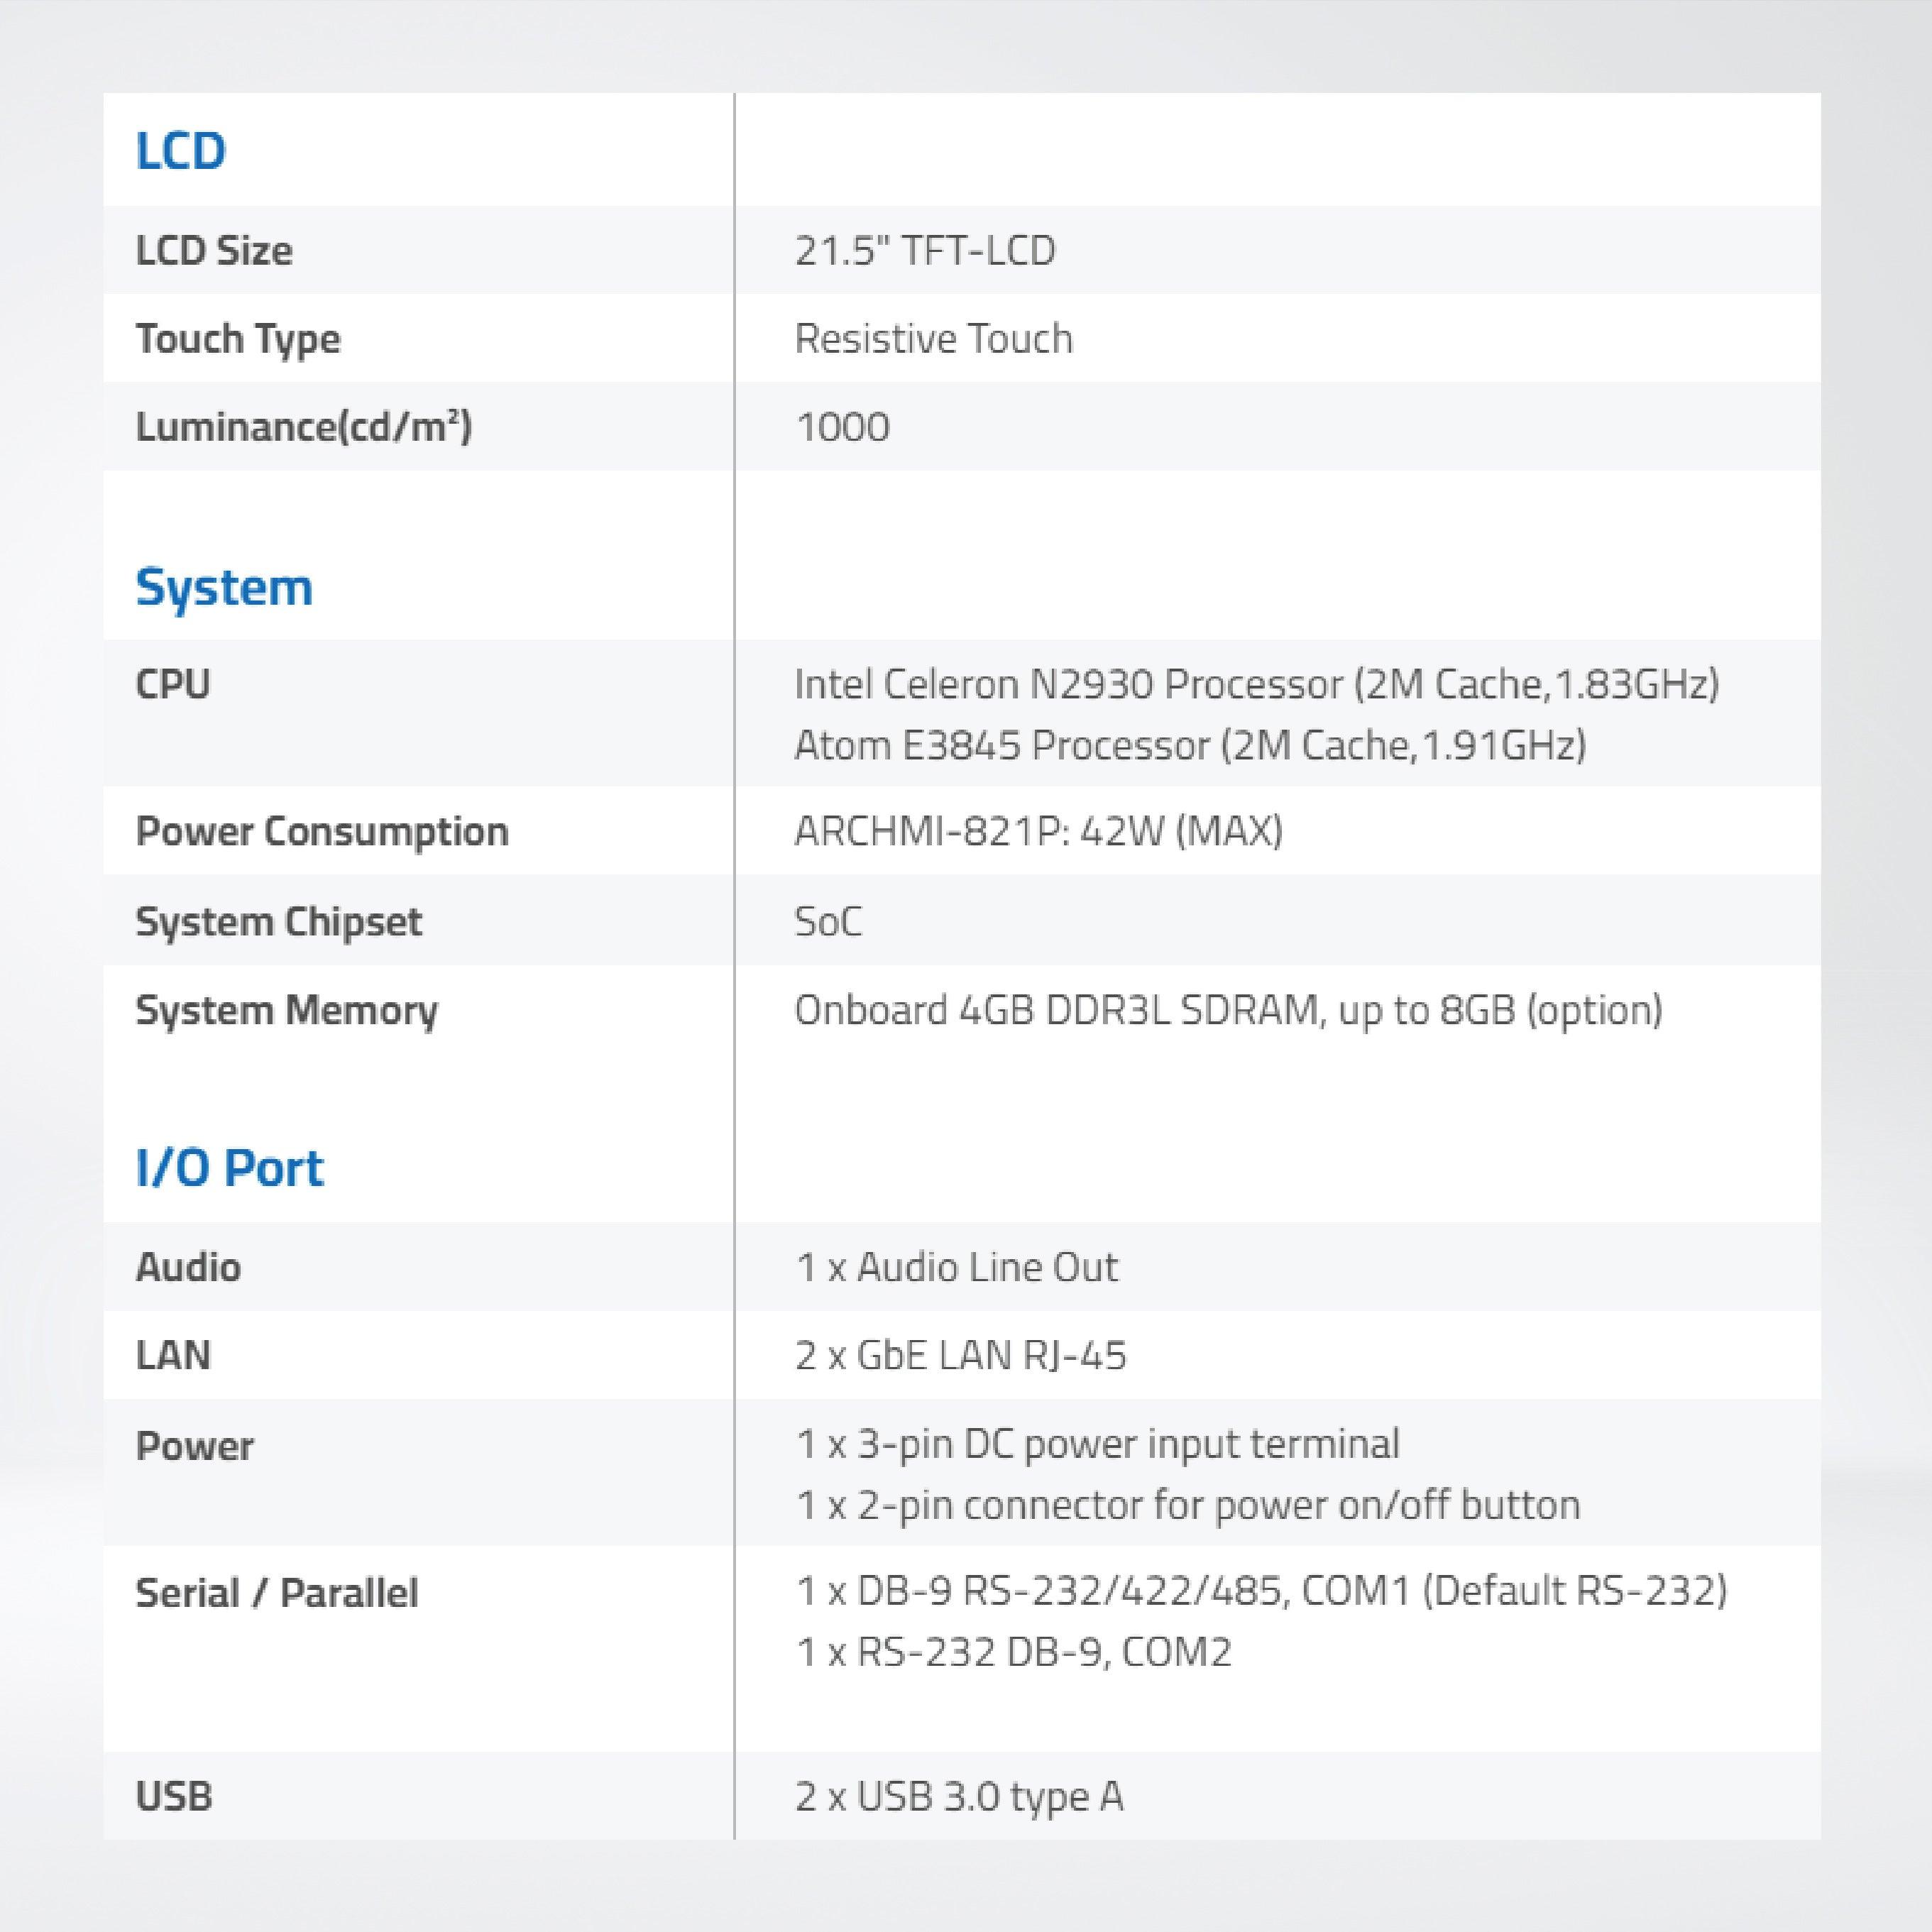 ARCHMI-821H 21.5" Intel Celeron N2930/ Atom E3845, Fanless Industrial Compact Size Panel PC - Riverplus